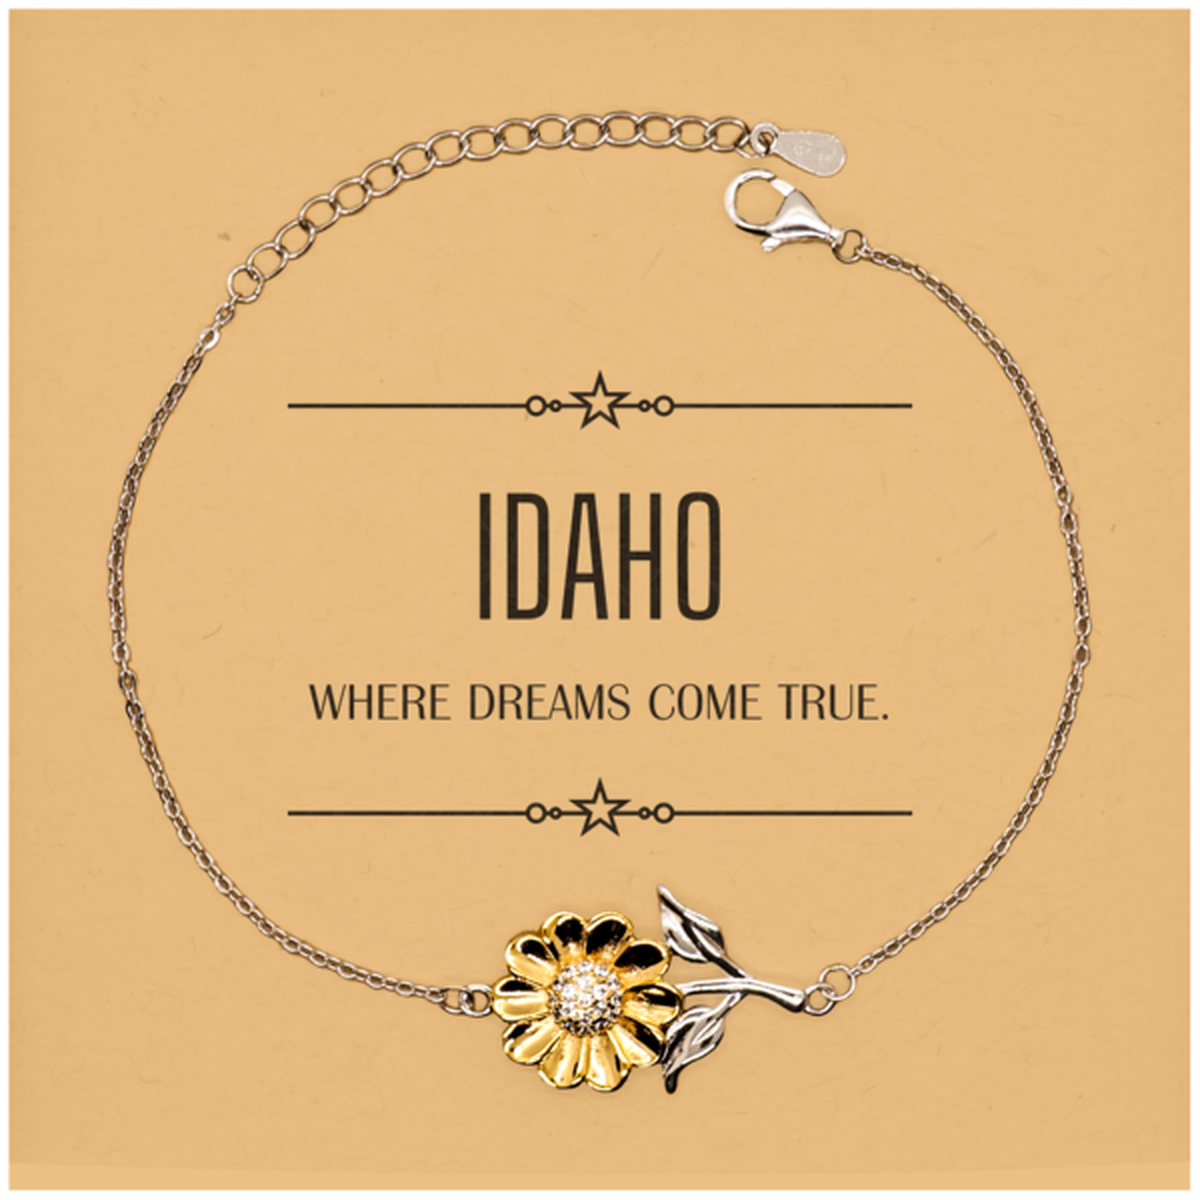 Love Idaho State Sunflower Bracelet, Idaho Where dreams come true, Birthday Christmas Inspirational Gifts For Idaho Men, Women, Friends